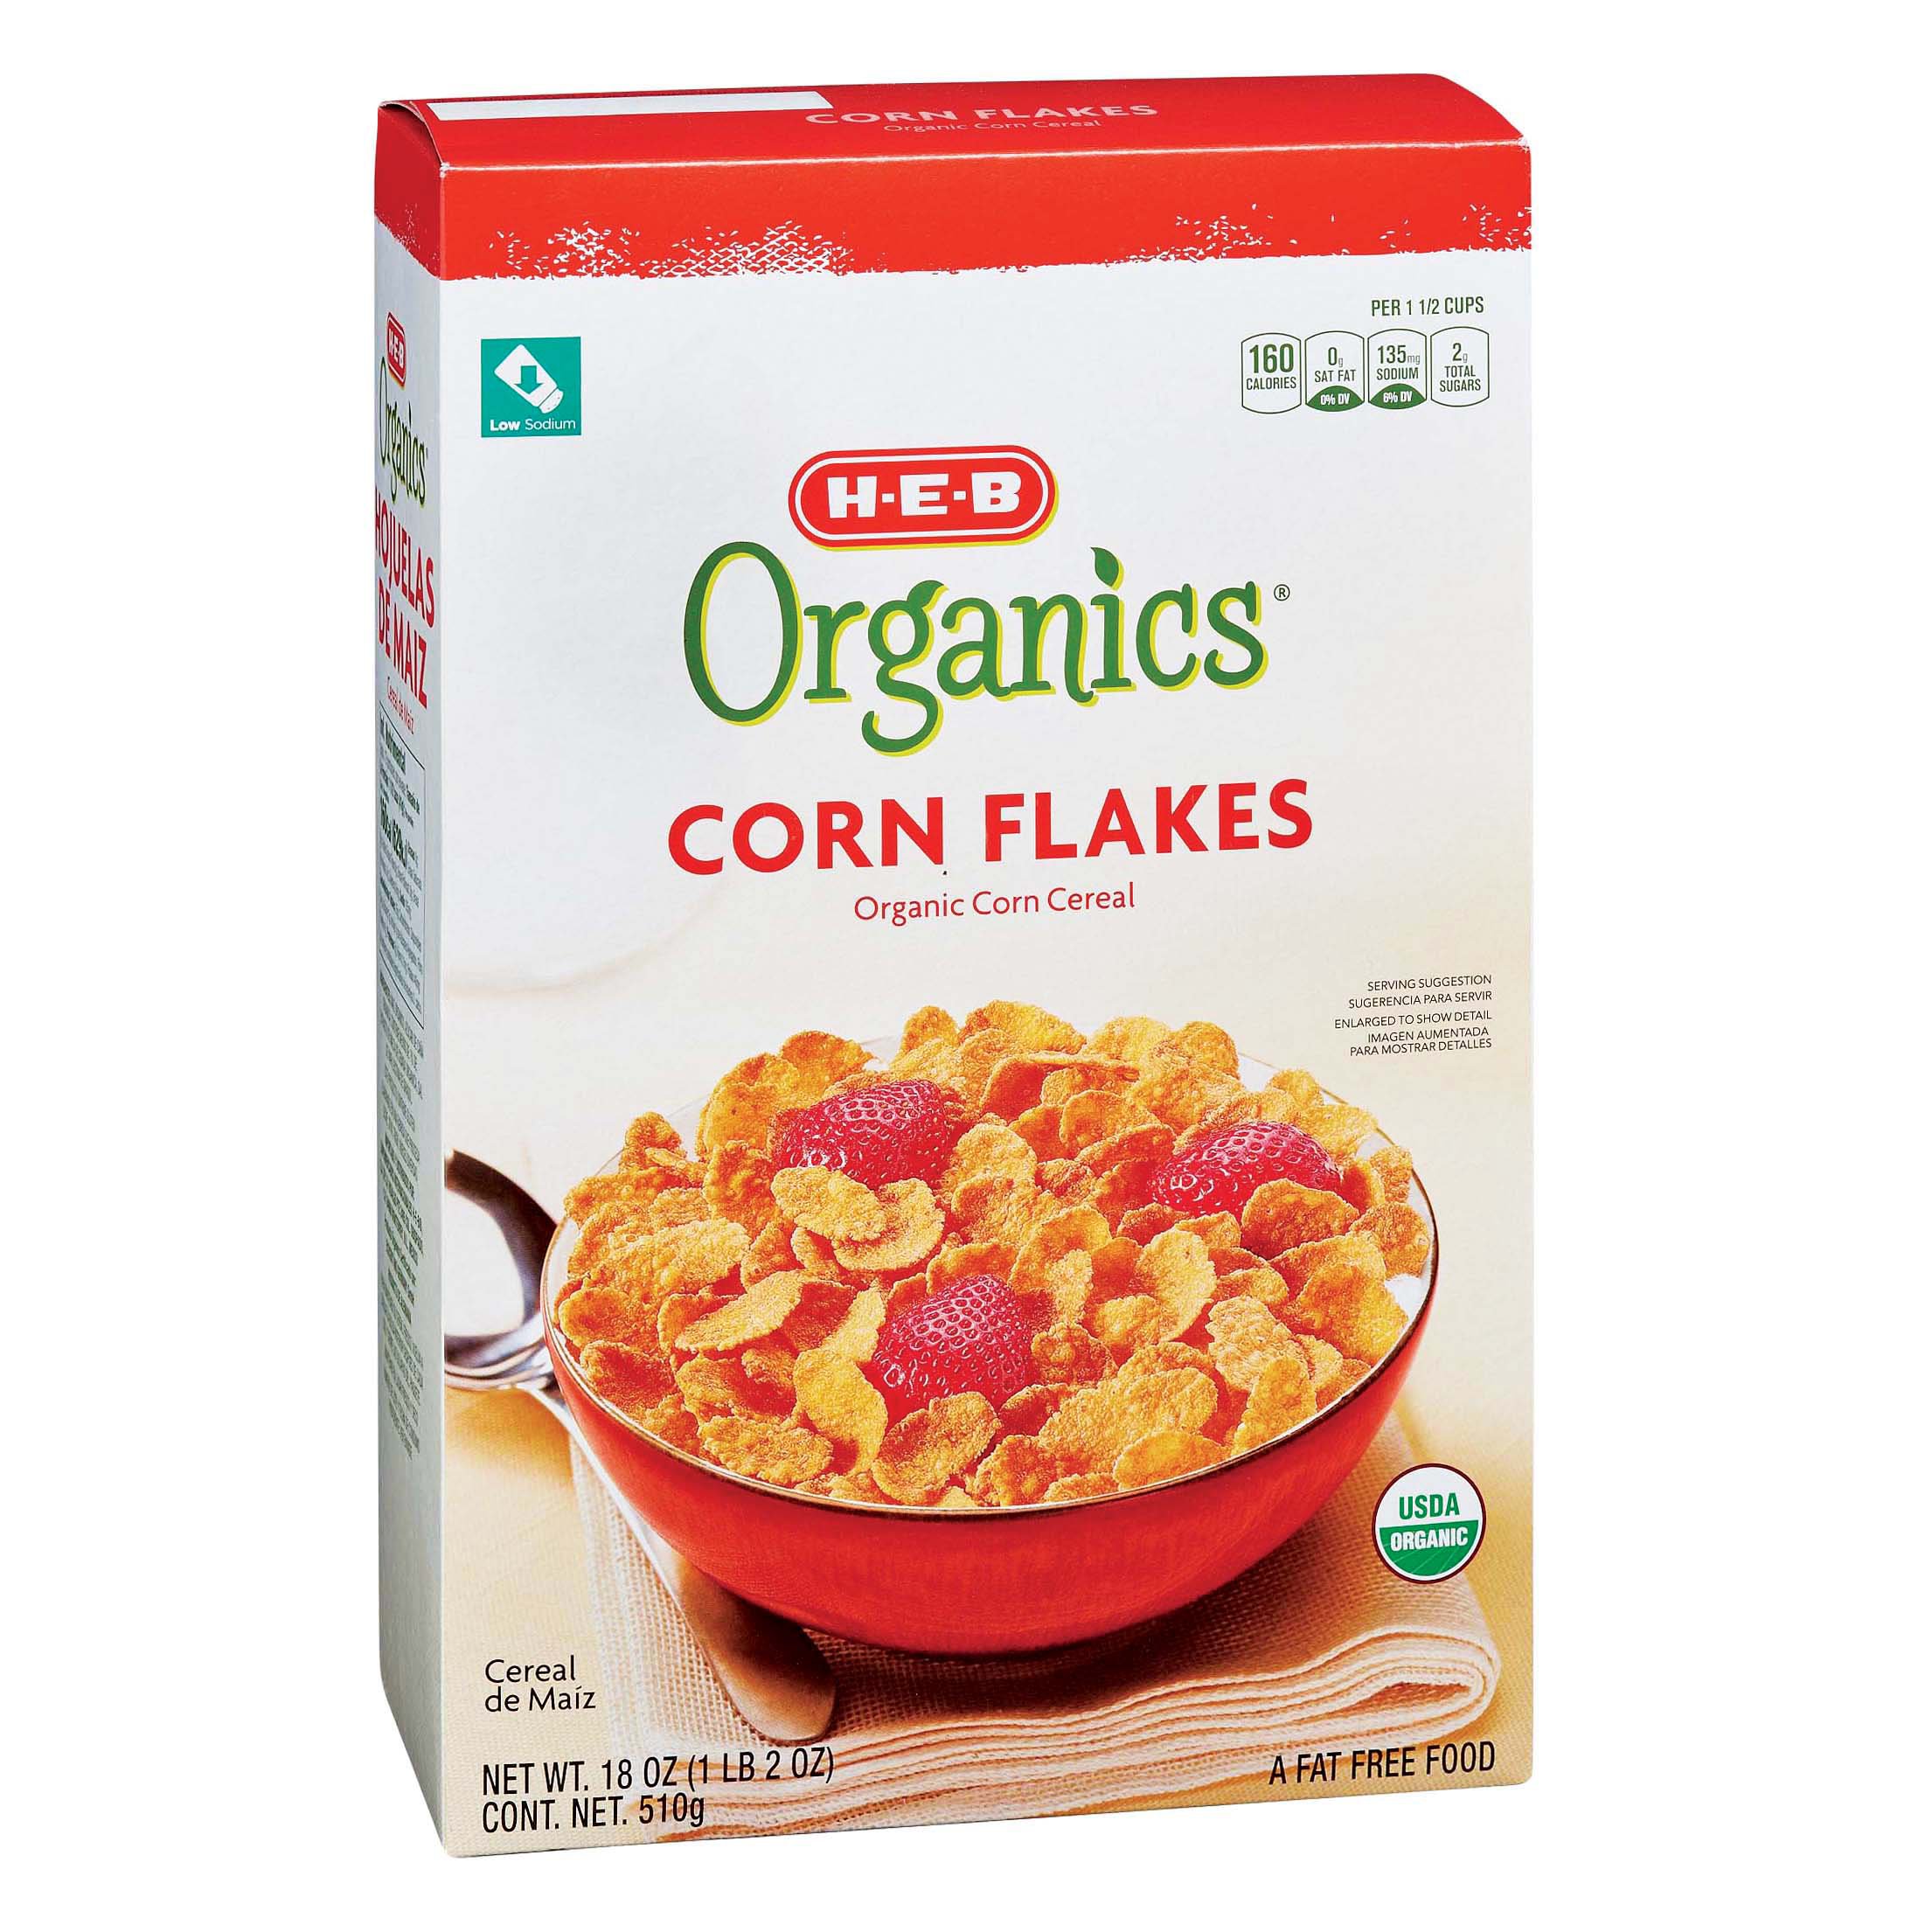 H-E-B Organics Corn Flakes - Shop Cereal at H-E-B